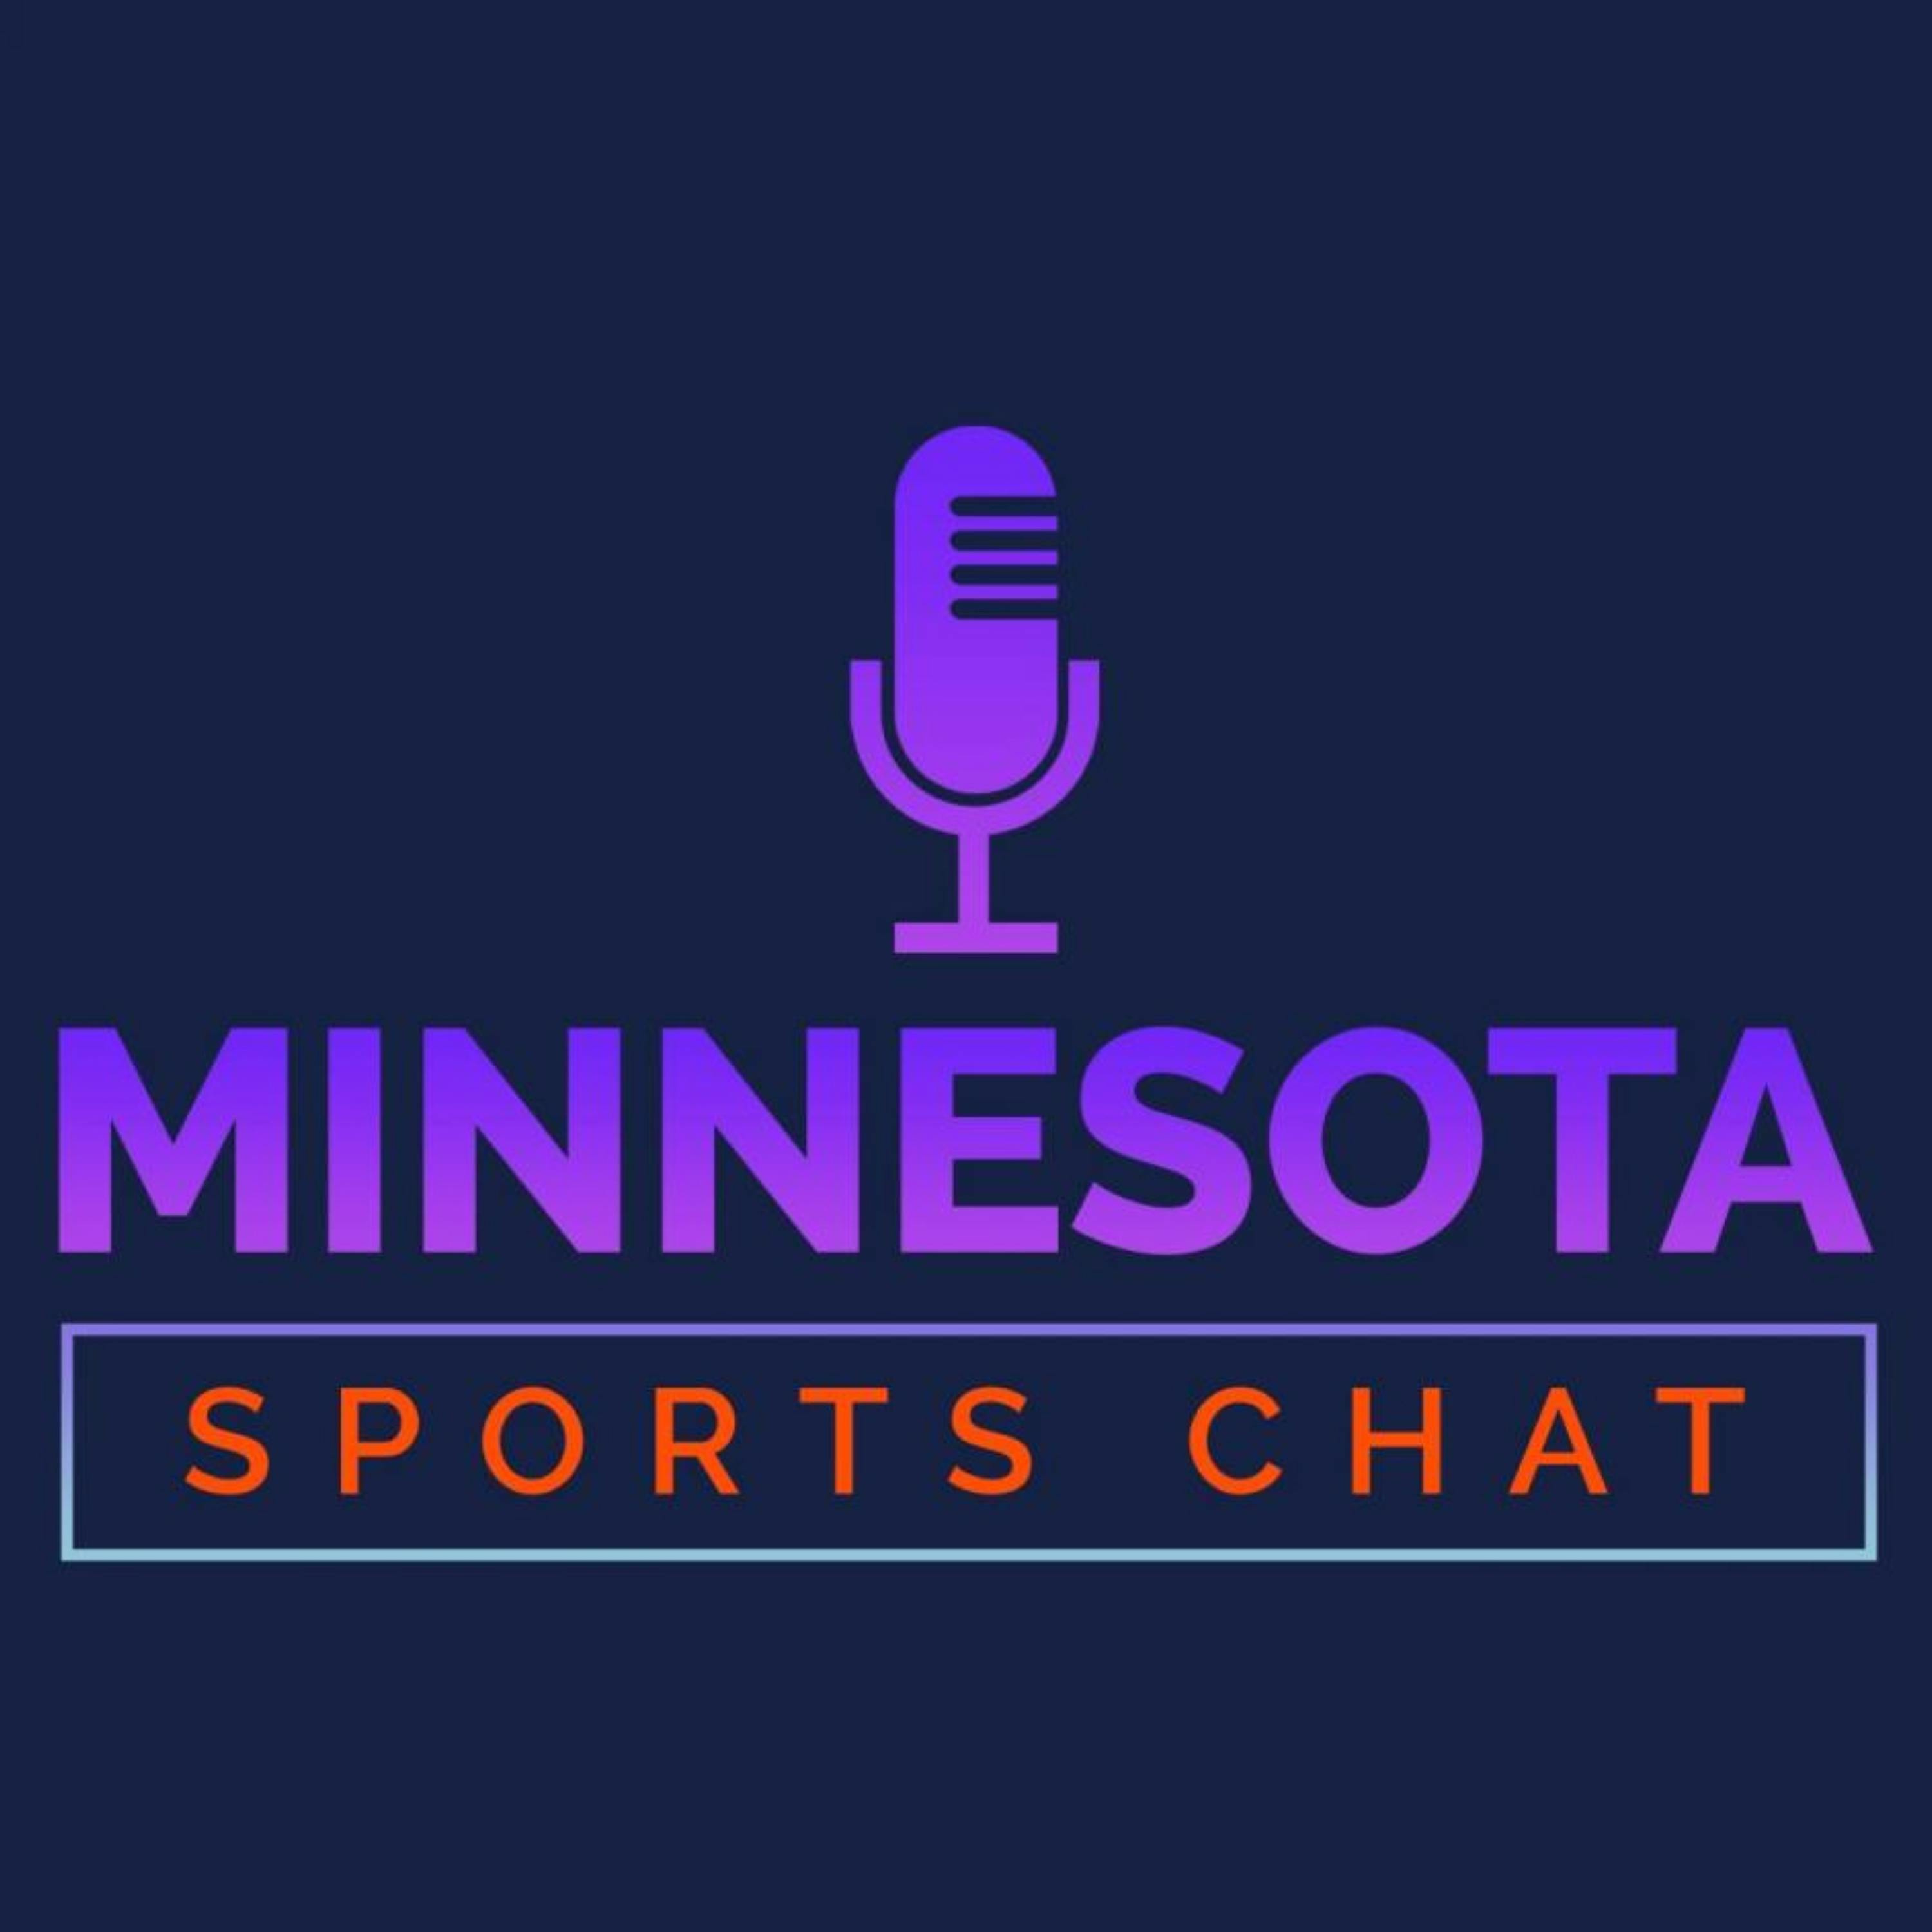 MSC: Minnesota Vikings got BUC'd up!